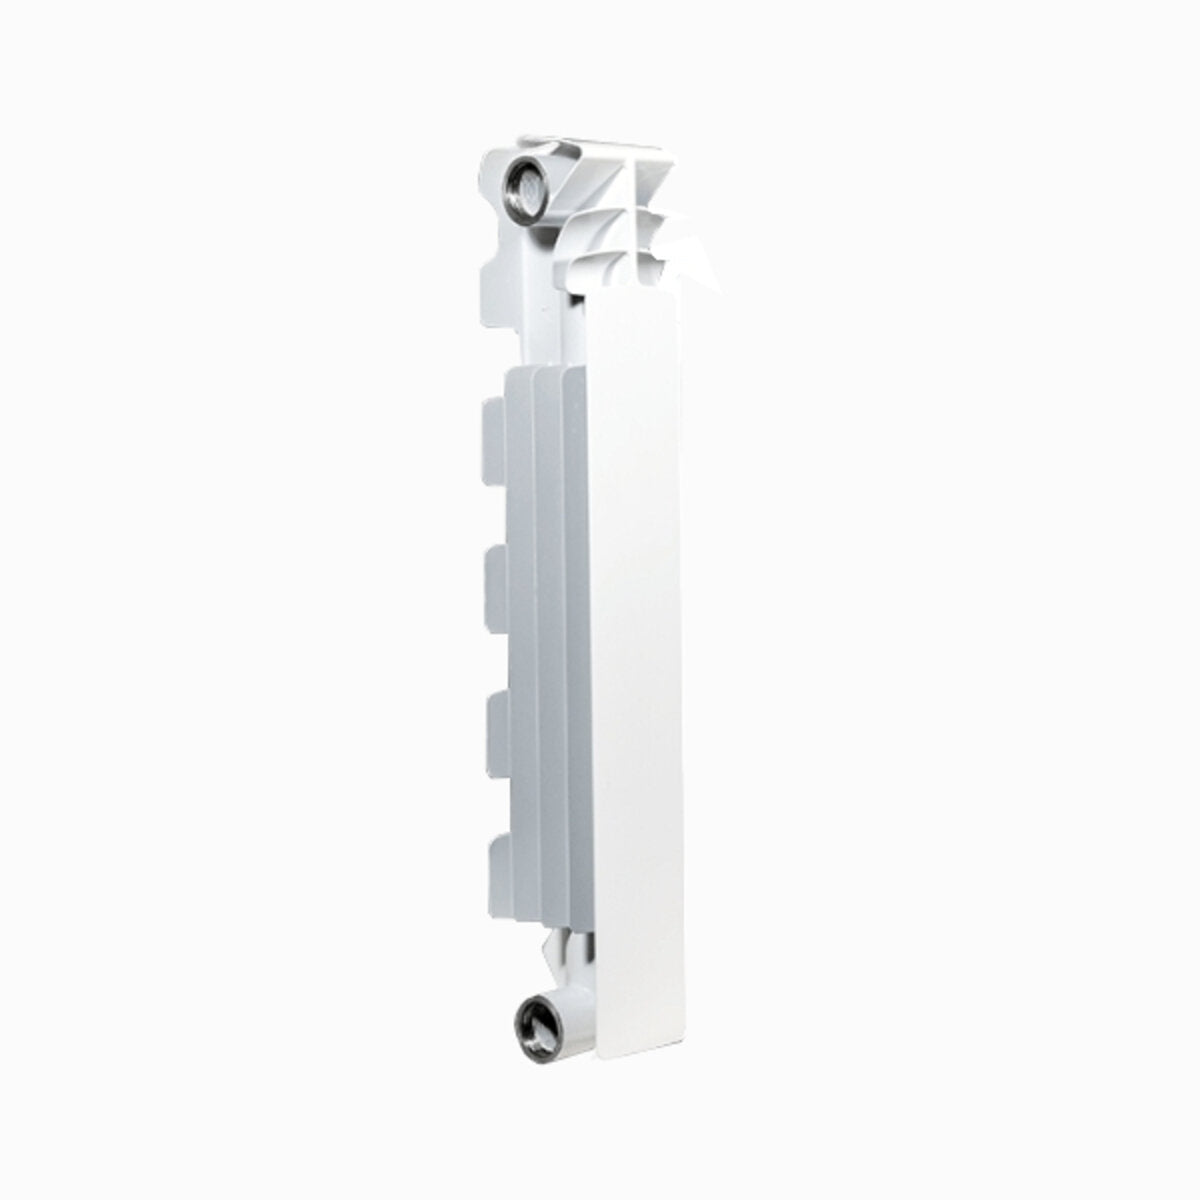 Fondital radiator in die-cast aluminum exclusive D3 single element center distance 600 mm